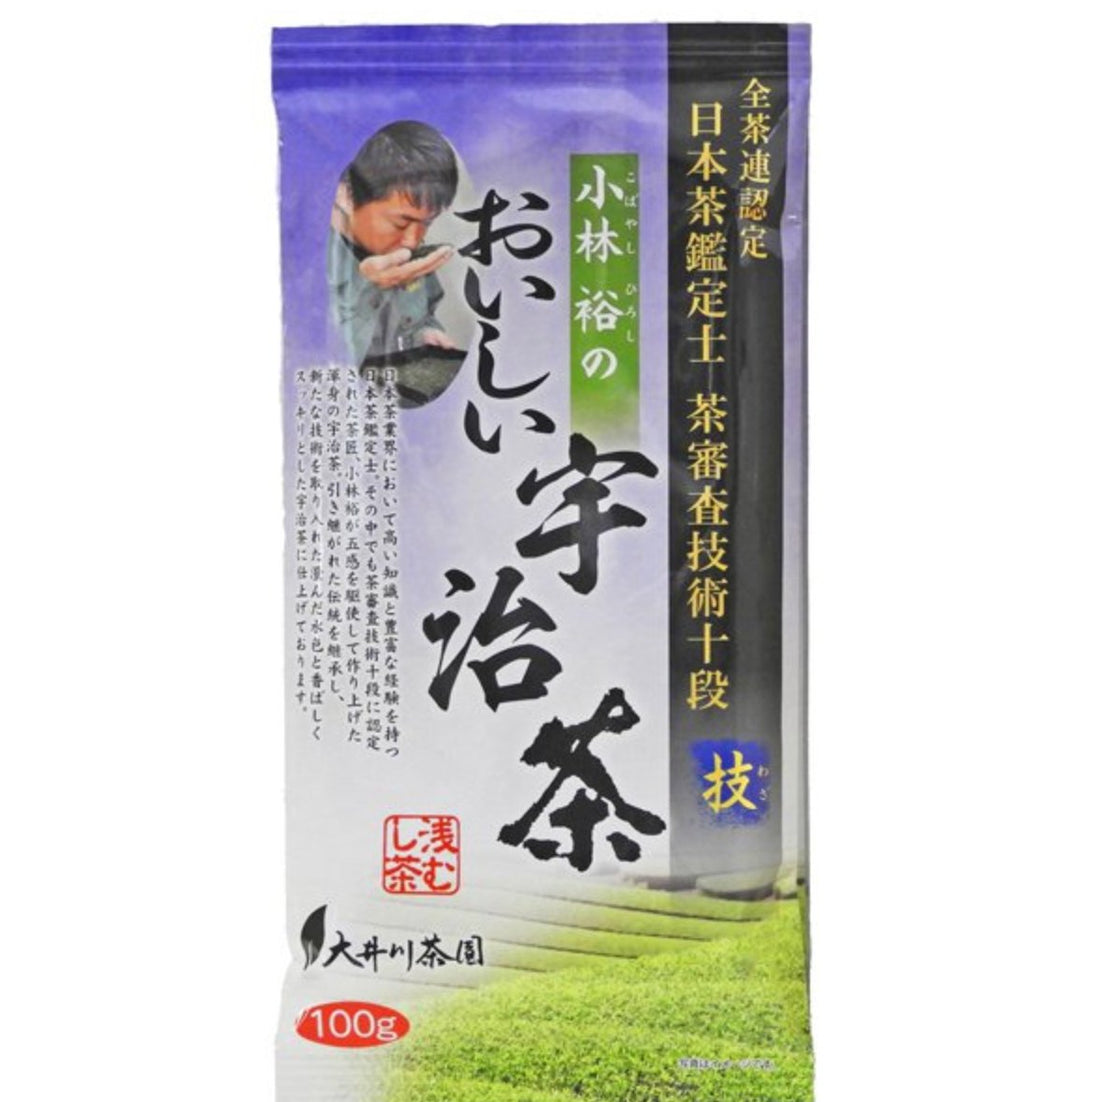 Oigawa Tea Garden Japanese Tea Appraiser, 10th Dan Tea Examination Technique, Hiroshi Kobayashi&